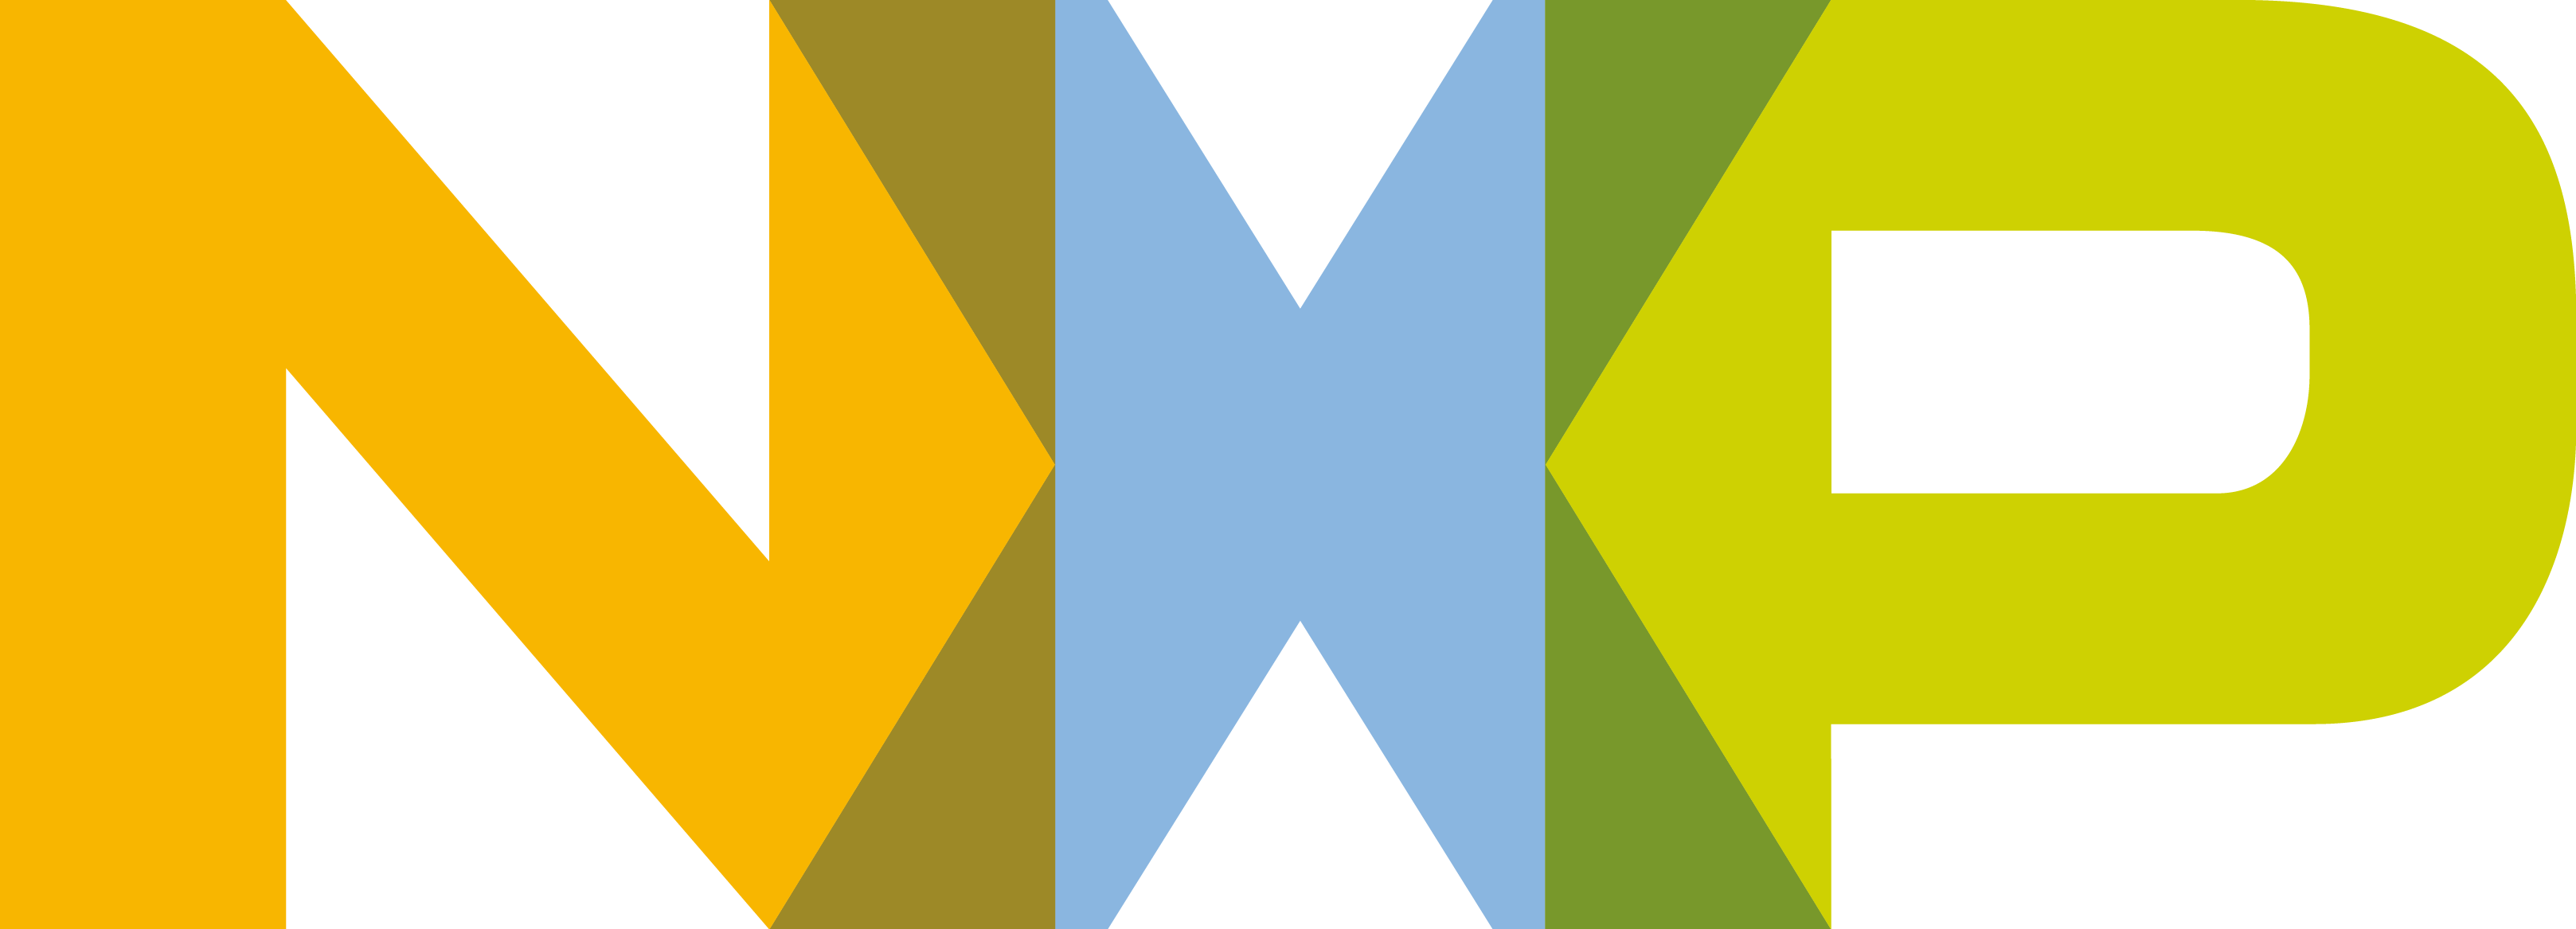 NXP Semiconductors Logo [nxp.com]